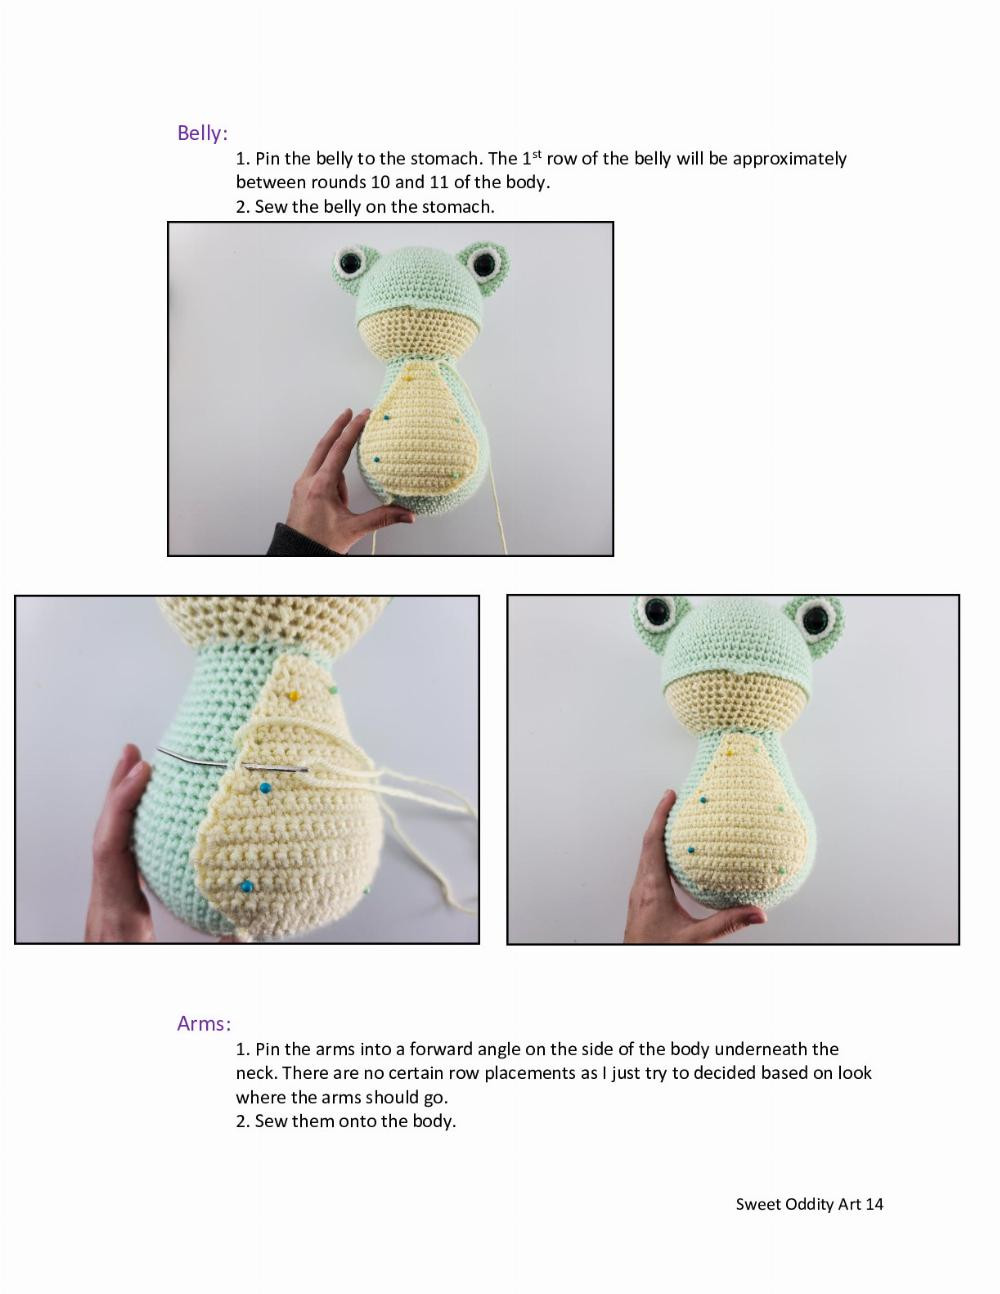 Sweet Oddity Art Breccan the Frog Crochet Pattern